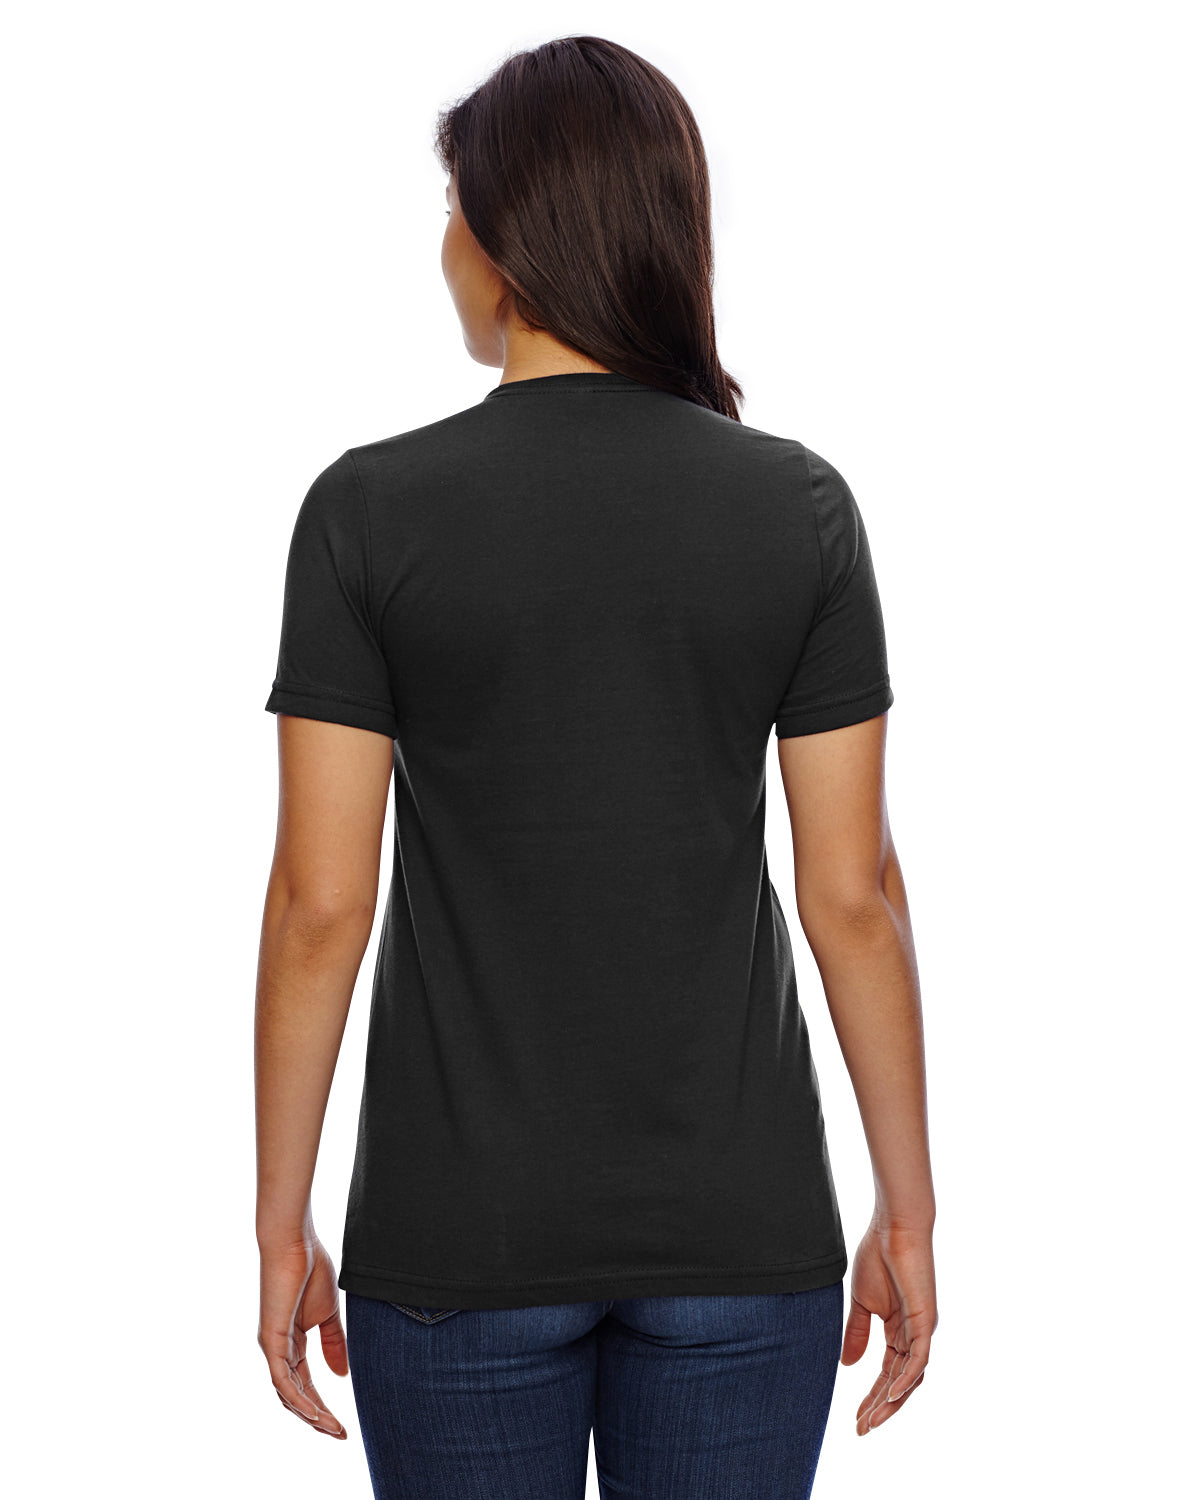 23215 – American Apparel Ladies’ Classic T-Shirt